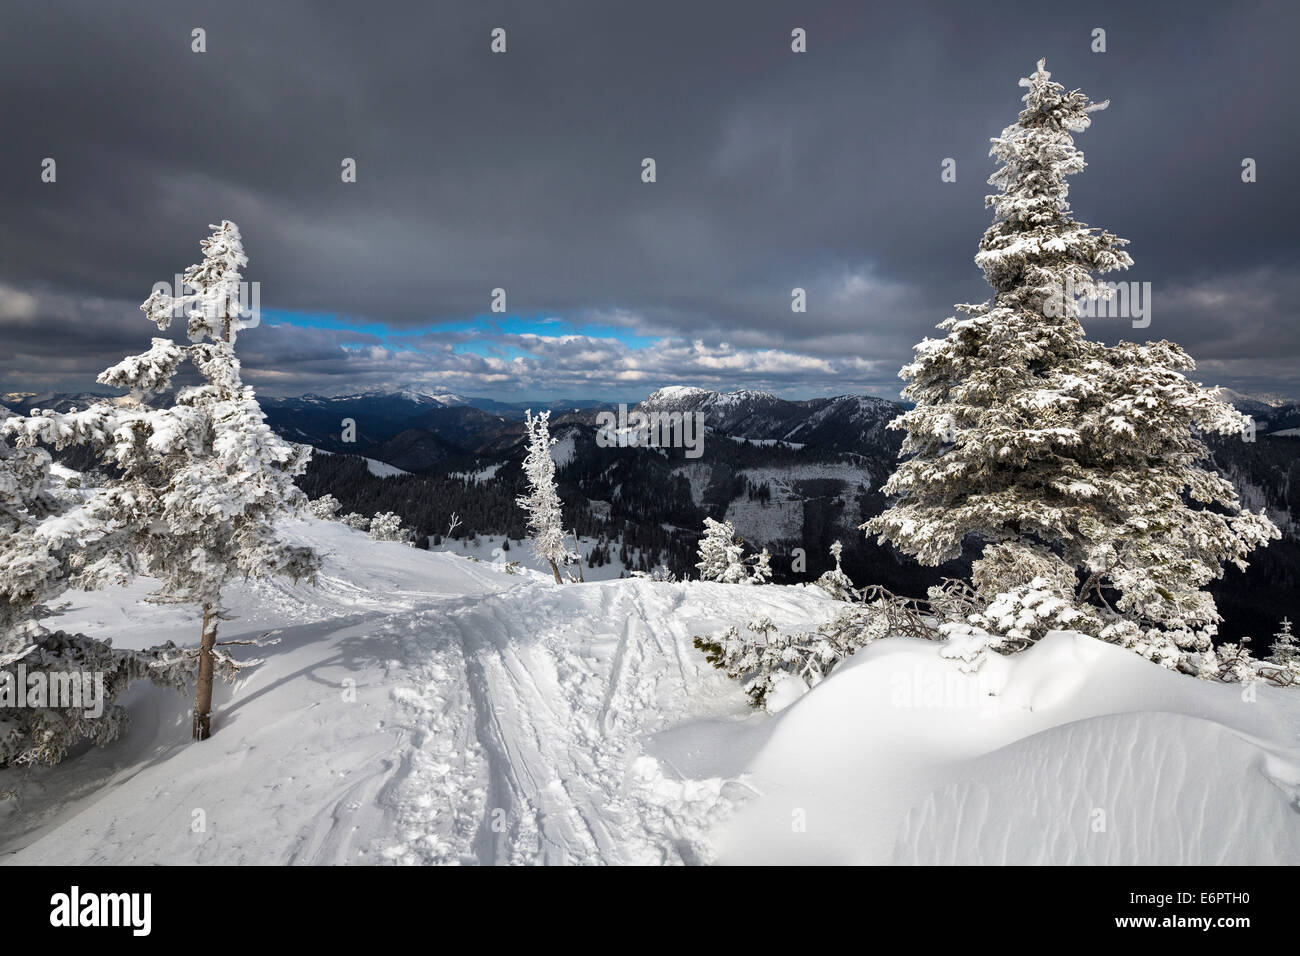 Snow-covered Mountain Pines (Pinus mugo) with a ski touring trail, Mt Wildkamm, Niederalpl, Mürzsteg Alps, Styria, Austria Stock Photo